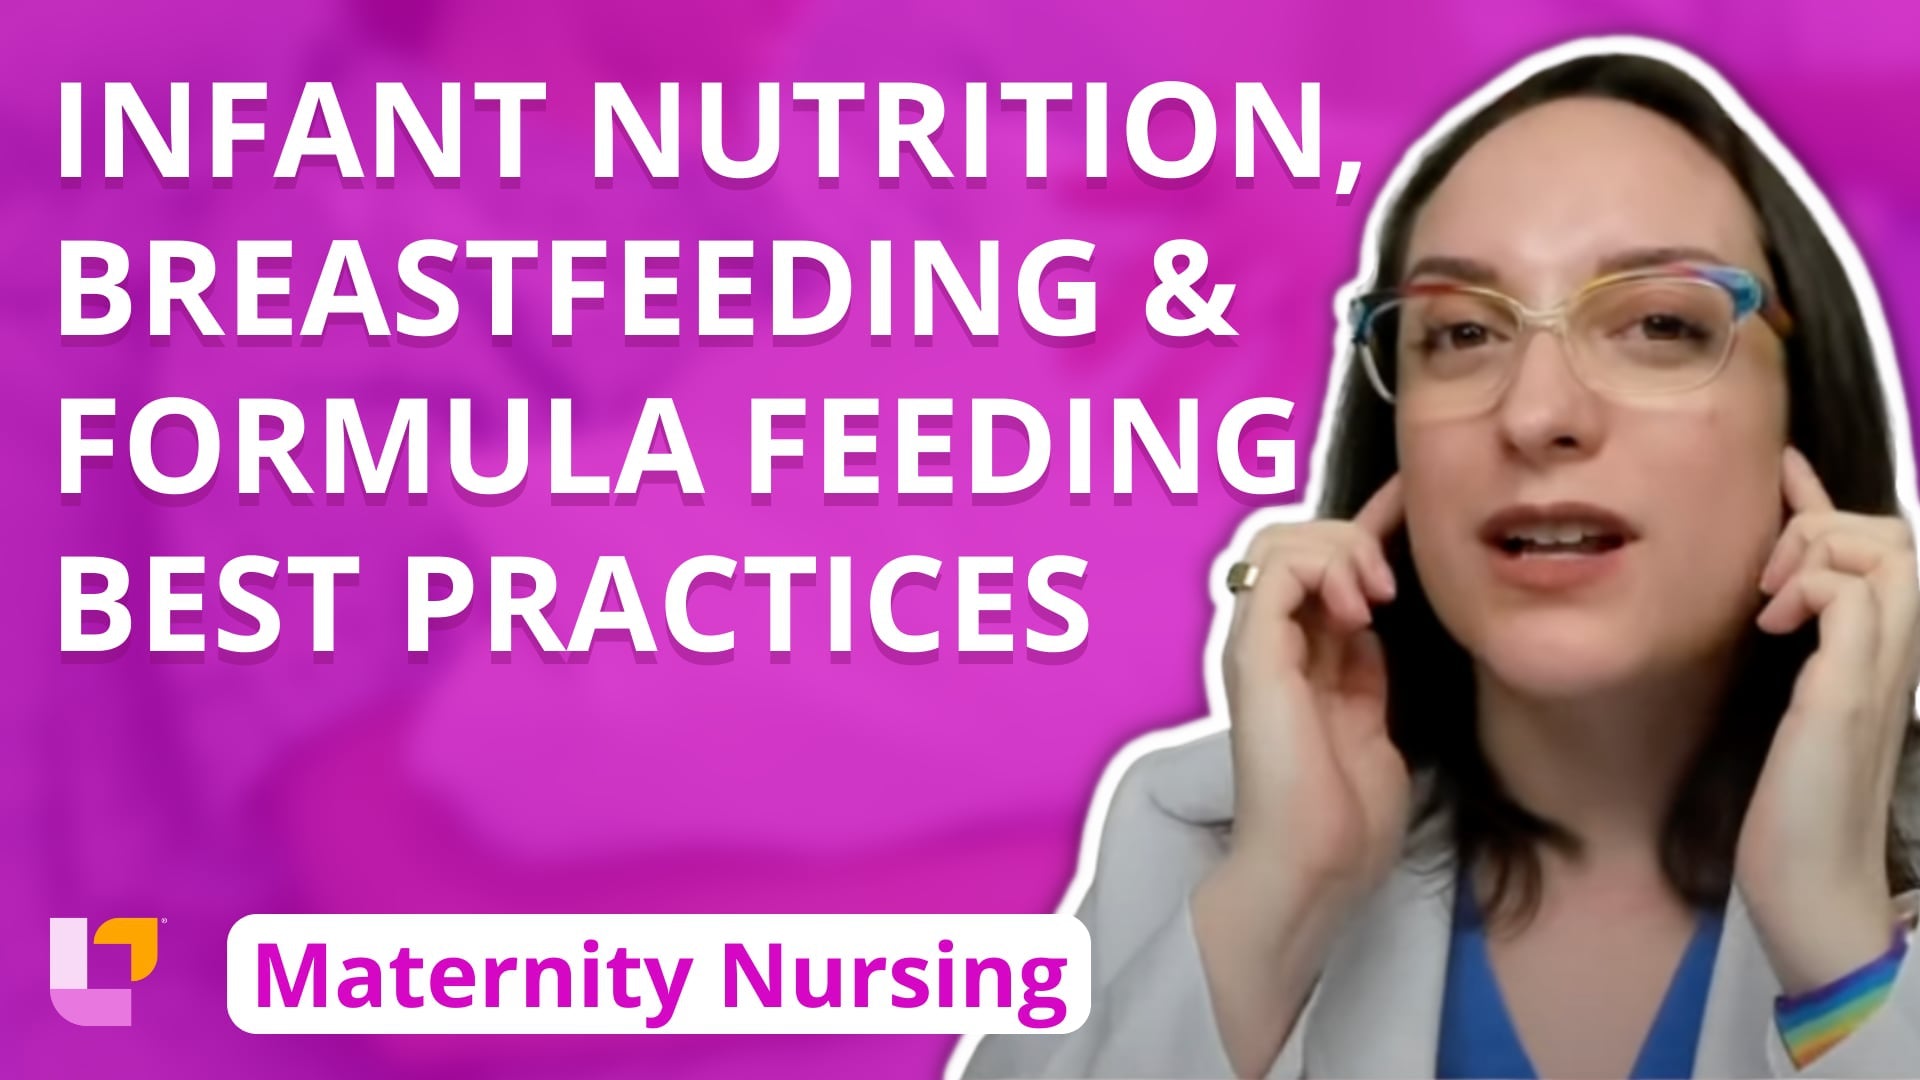 Maternity - Newborn, part 7: Infant Nutrition, Breastfeeding and Formula Feeding Best Practices - LevelUpRN